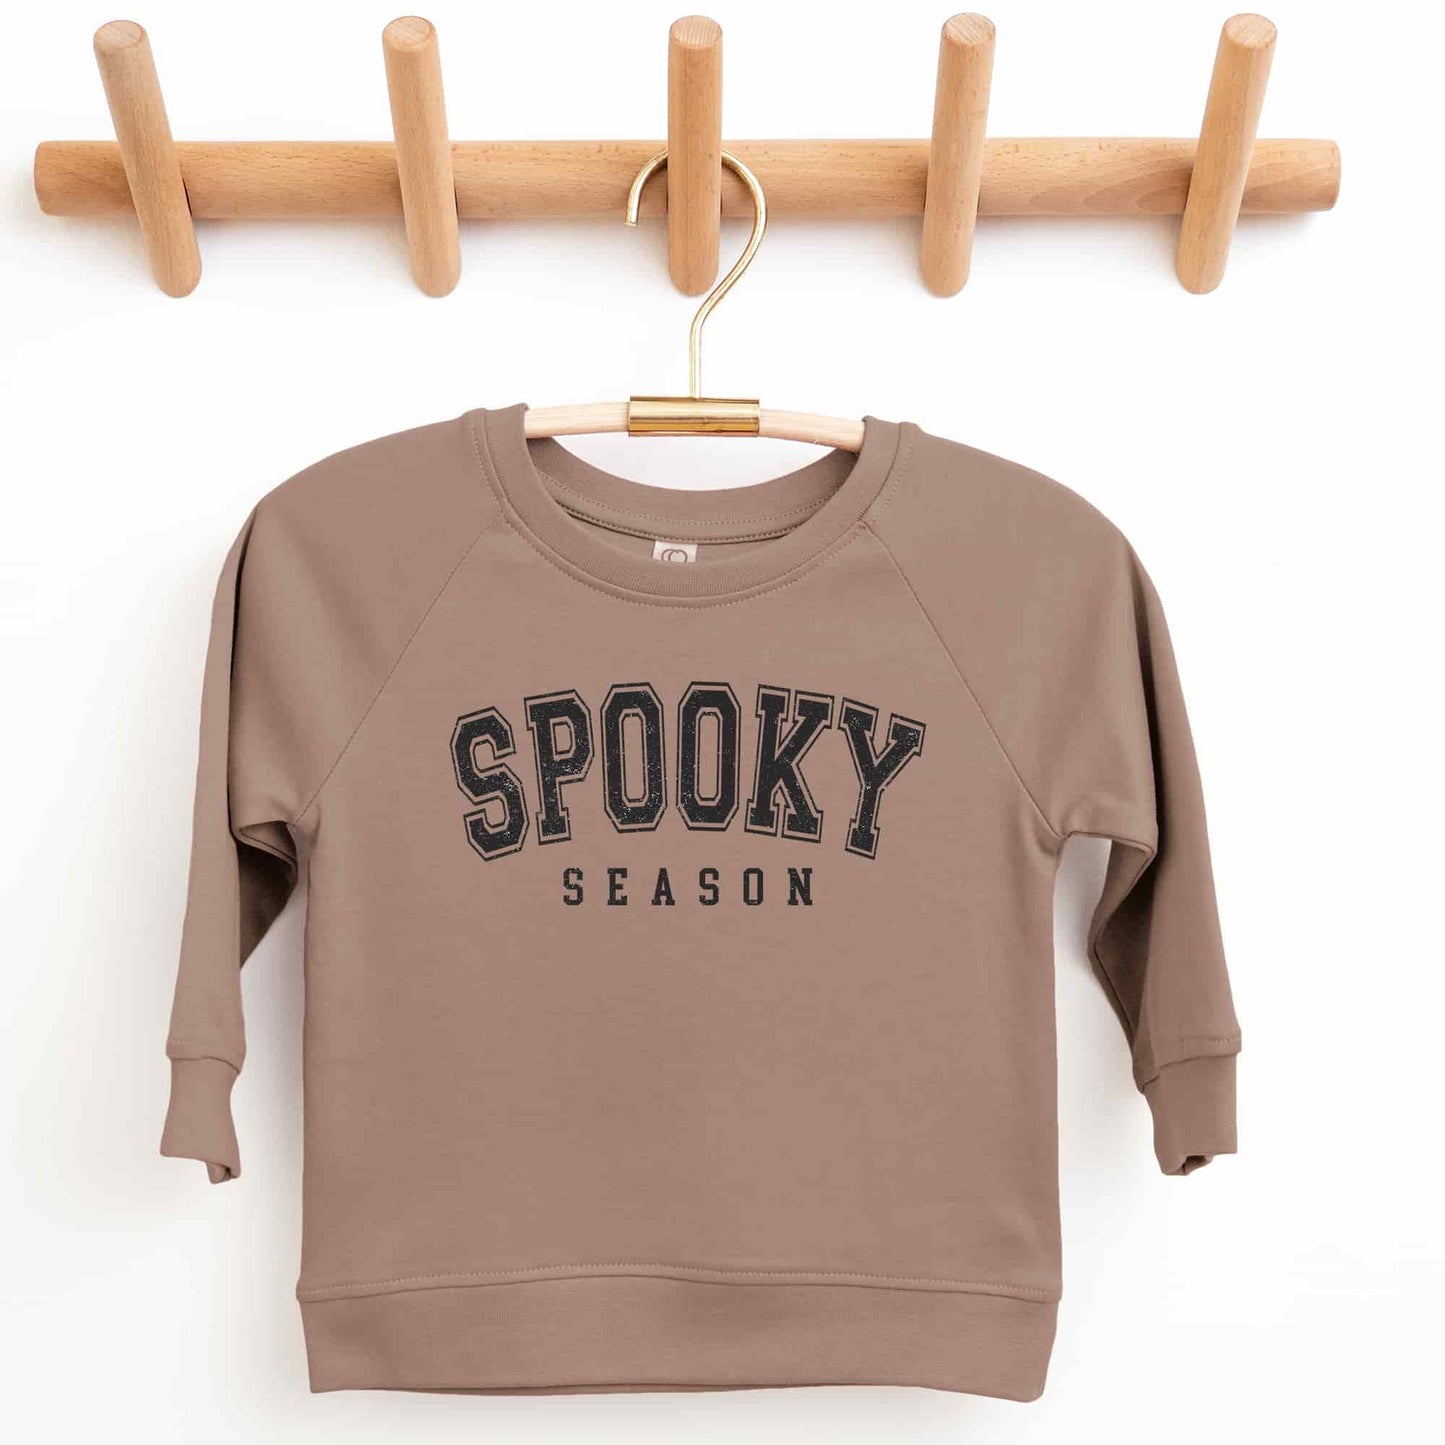 Spooky Season Organic Cotton Lightweight Crewneck Pullover